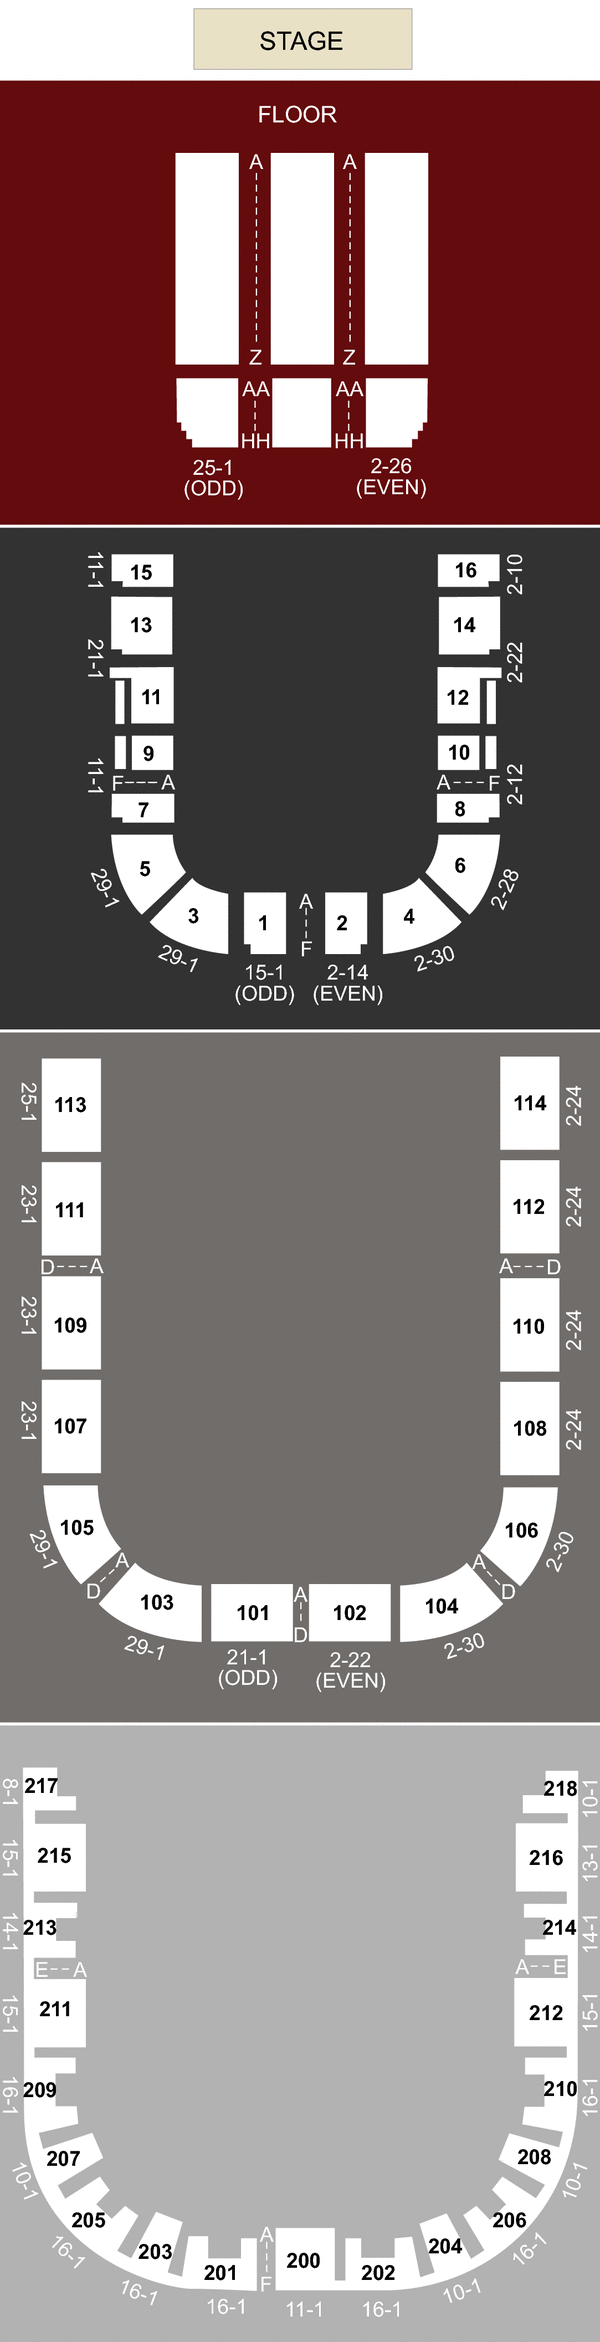 Sacramento Memorial Auditorium Seating Chart